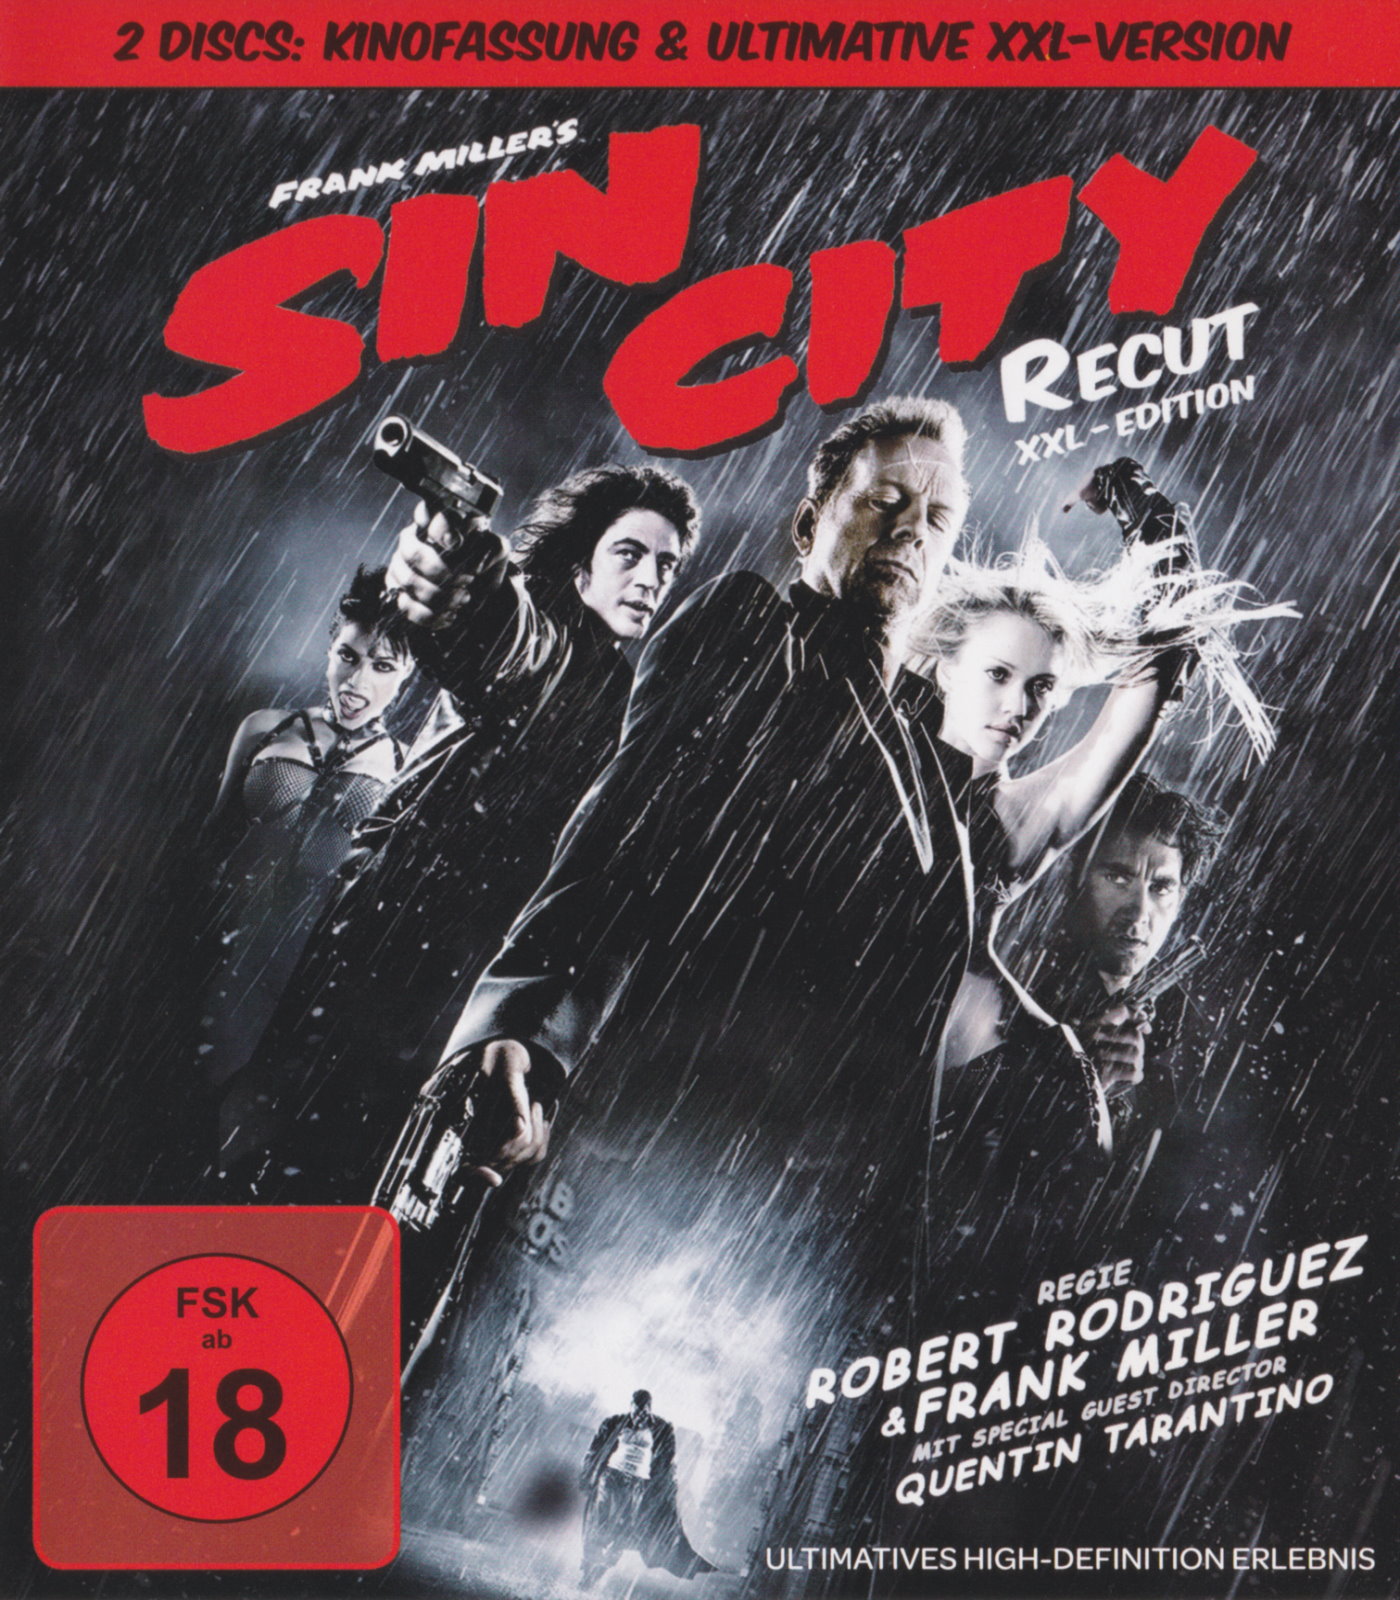 Cover - Sin City.jpg